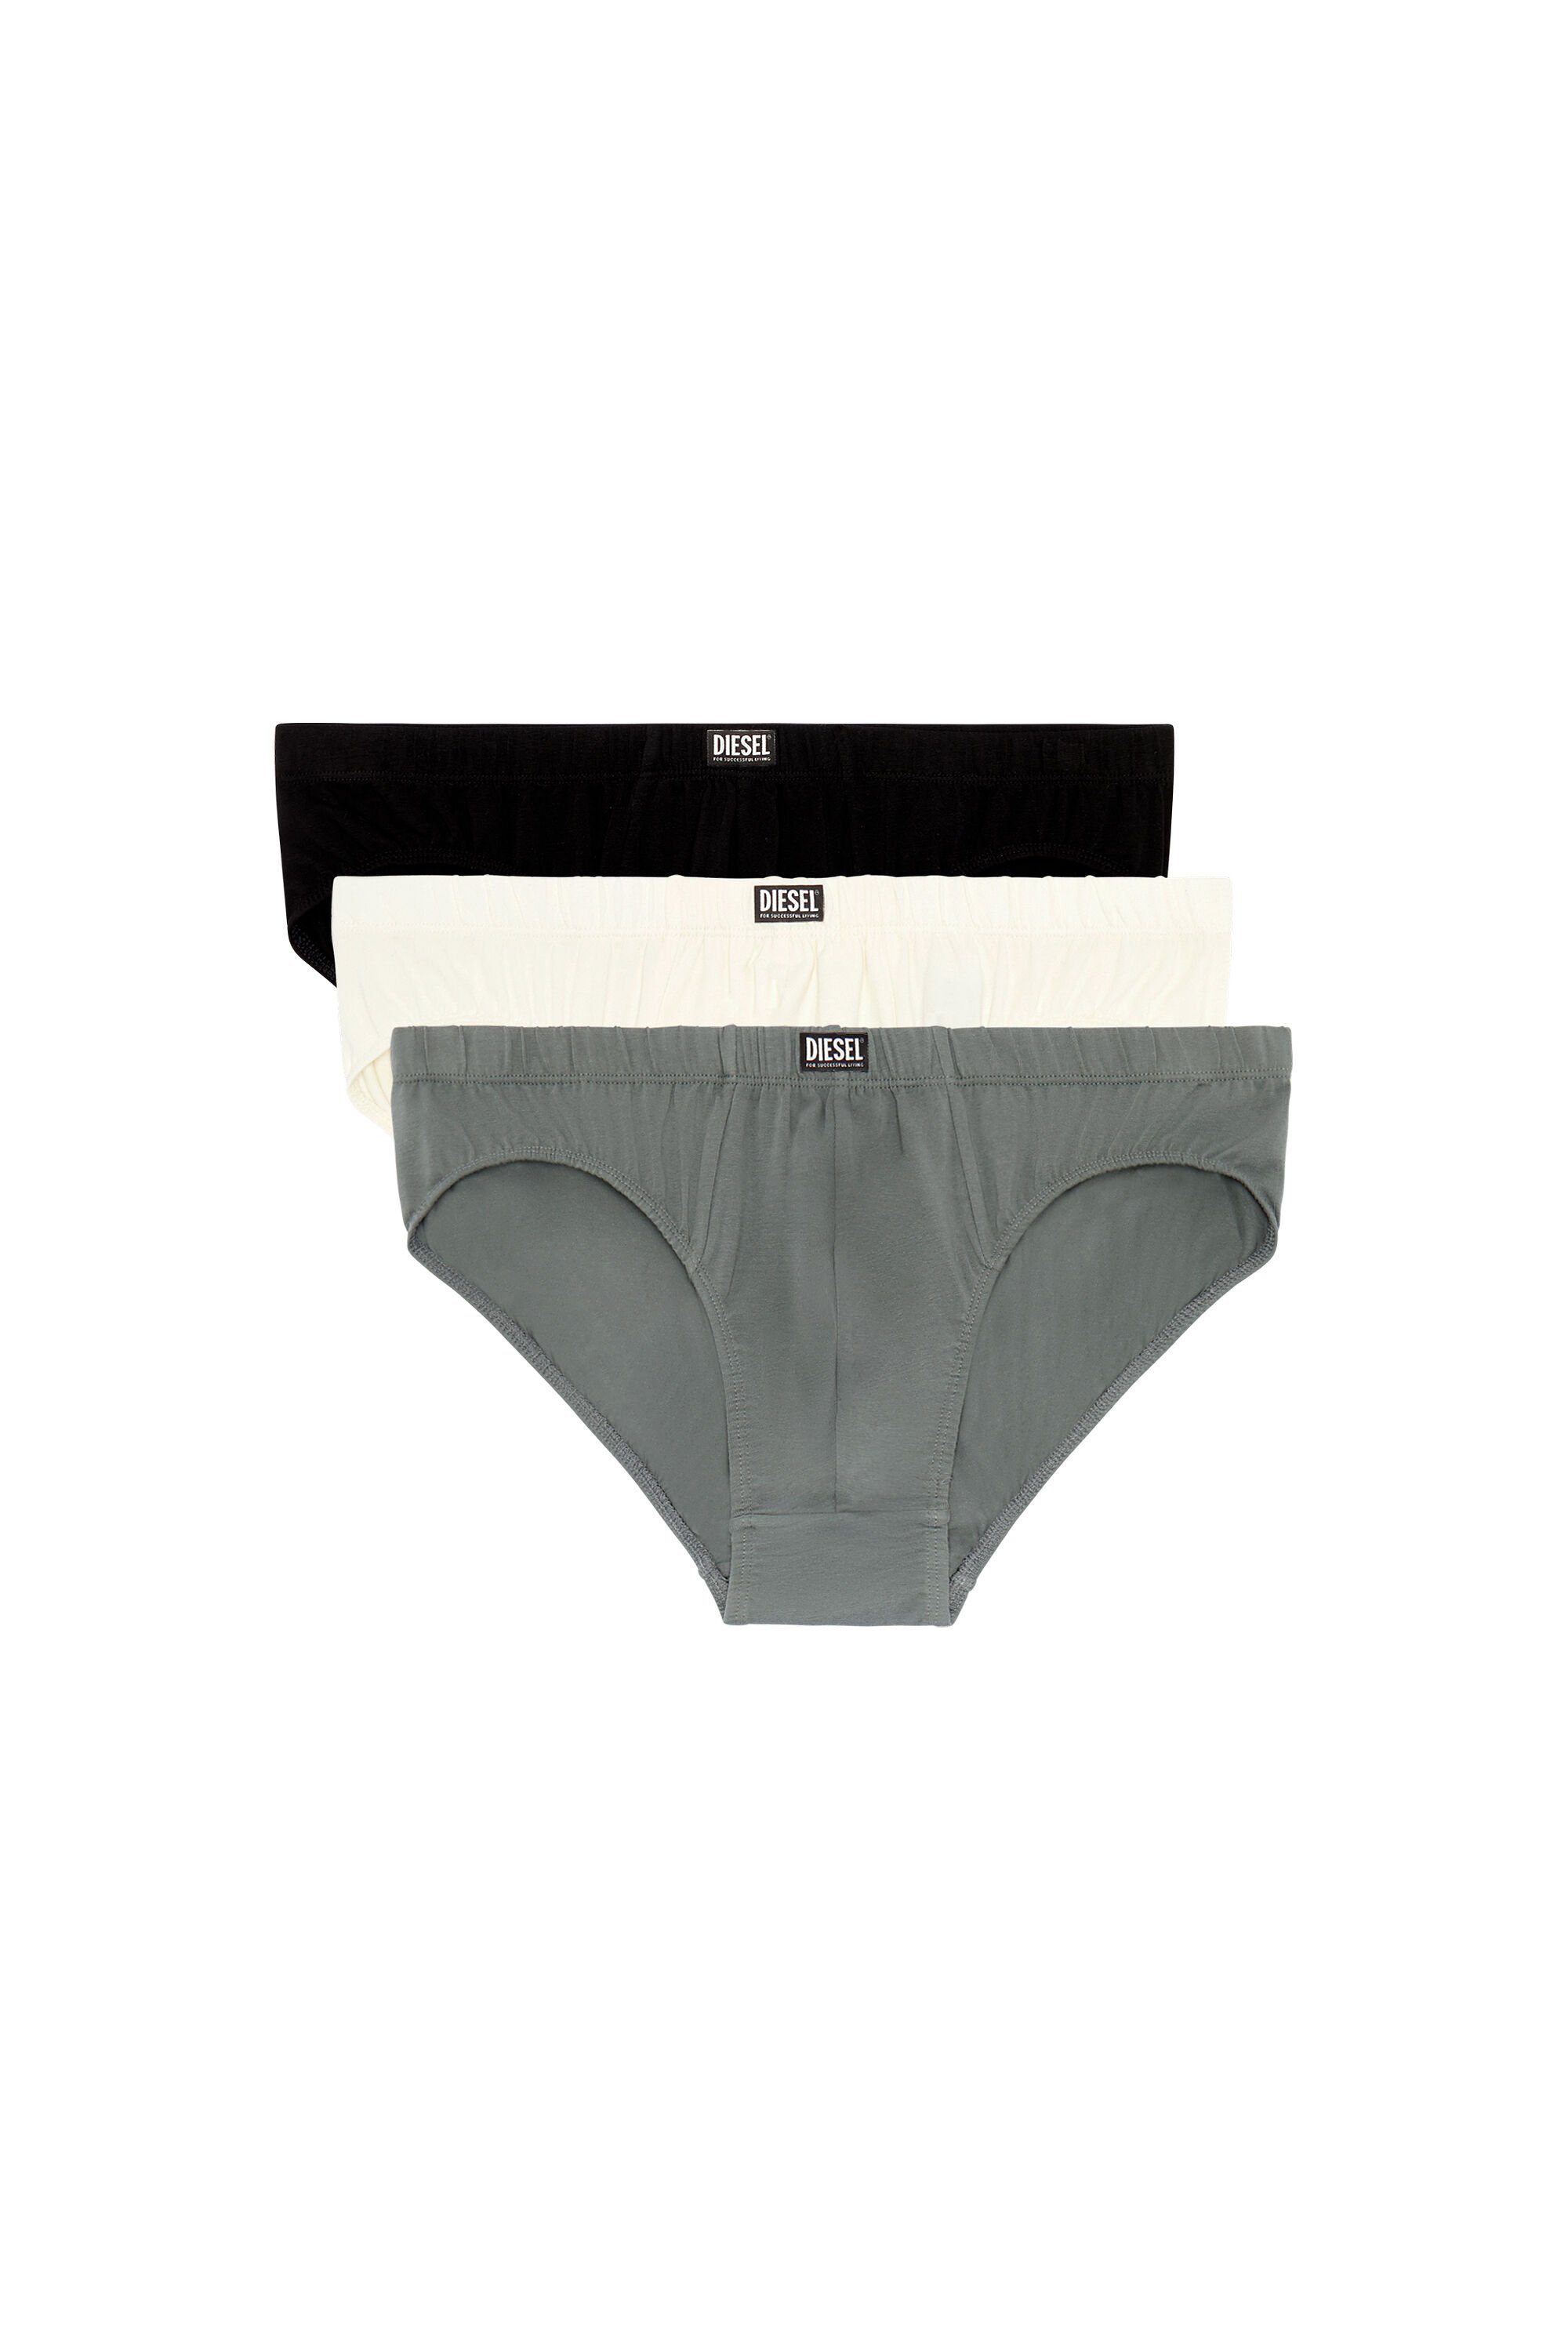 Underwear - Tesco Groceries